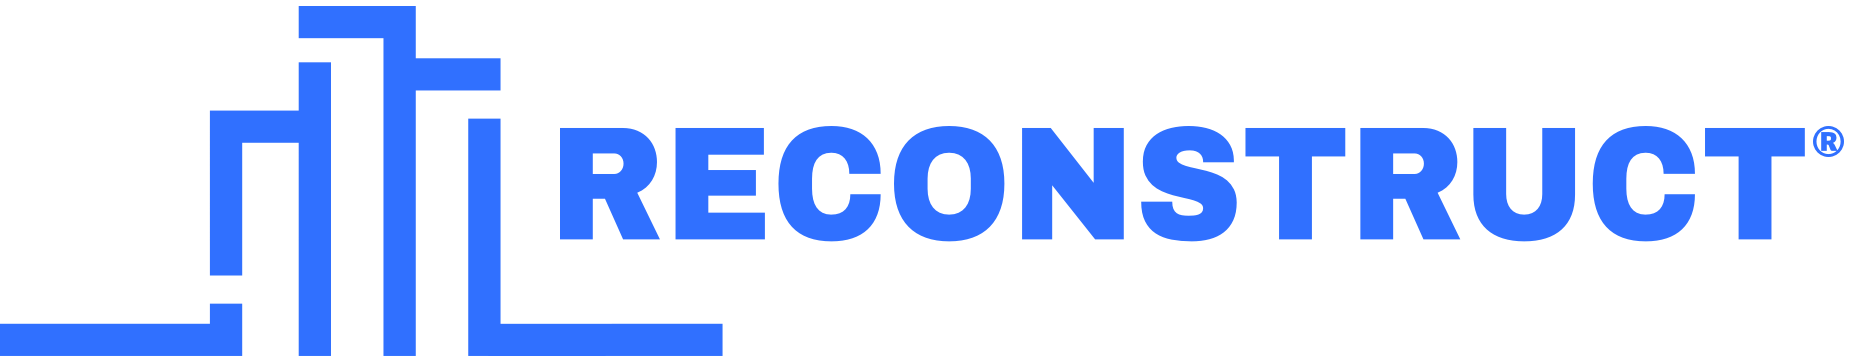 Reconstruct logo blue horizontal